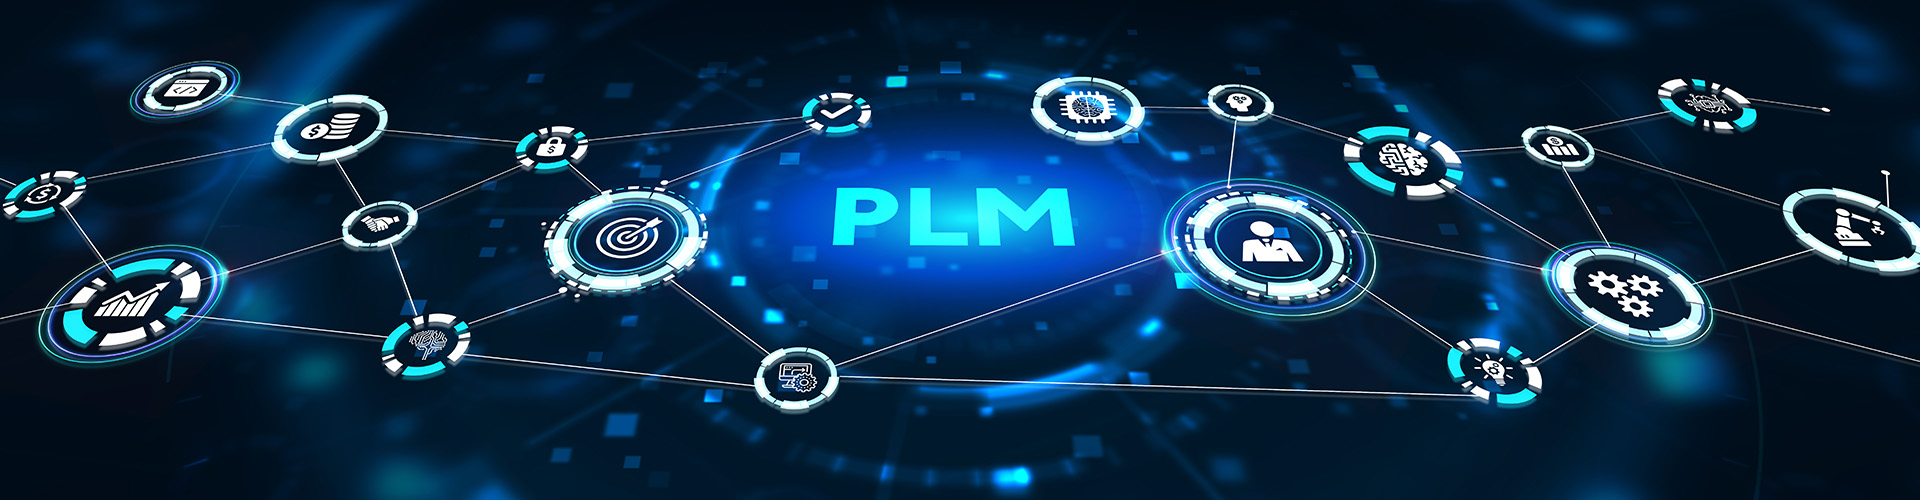 PLM-industrie